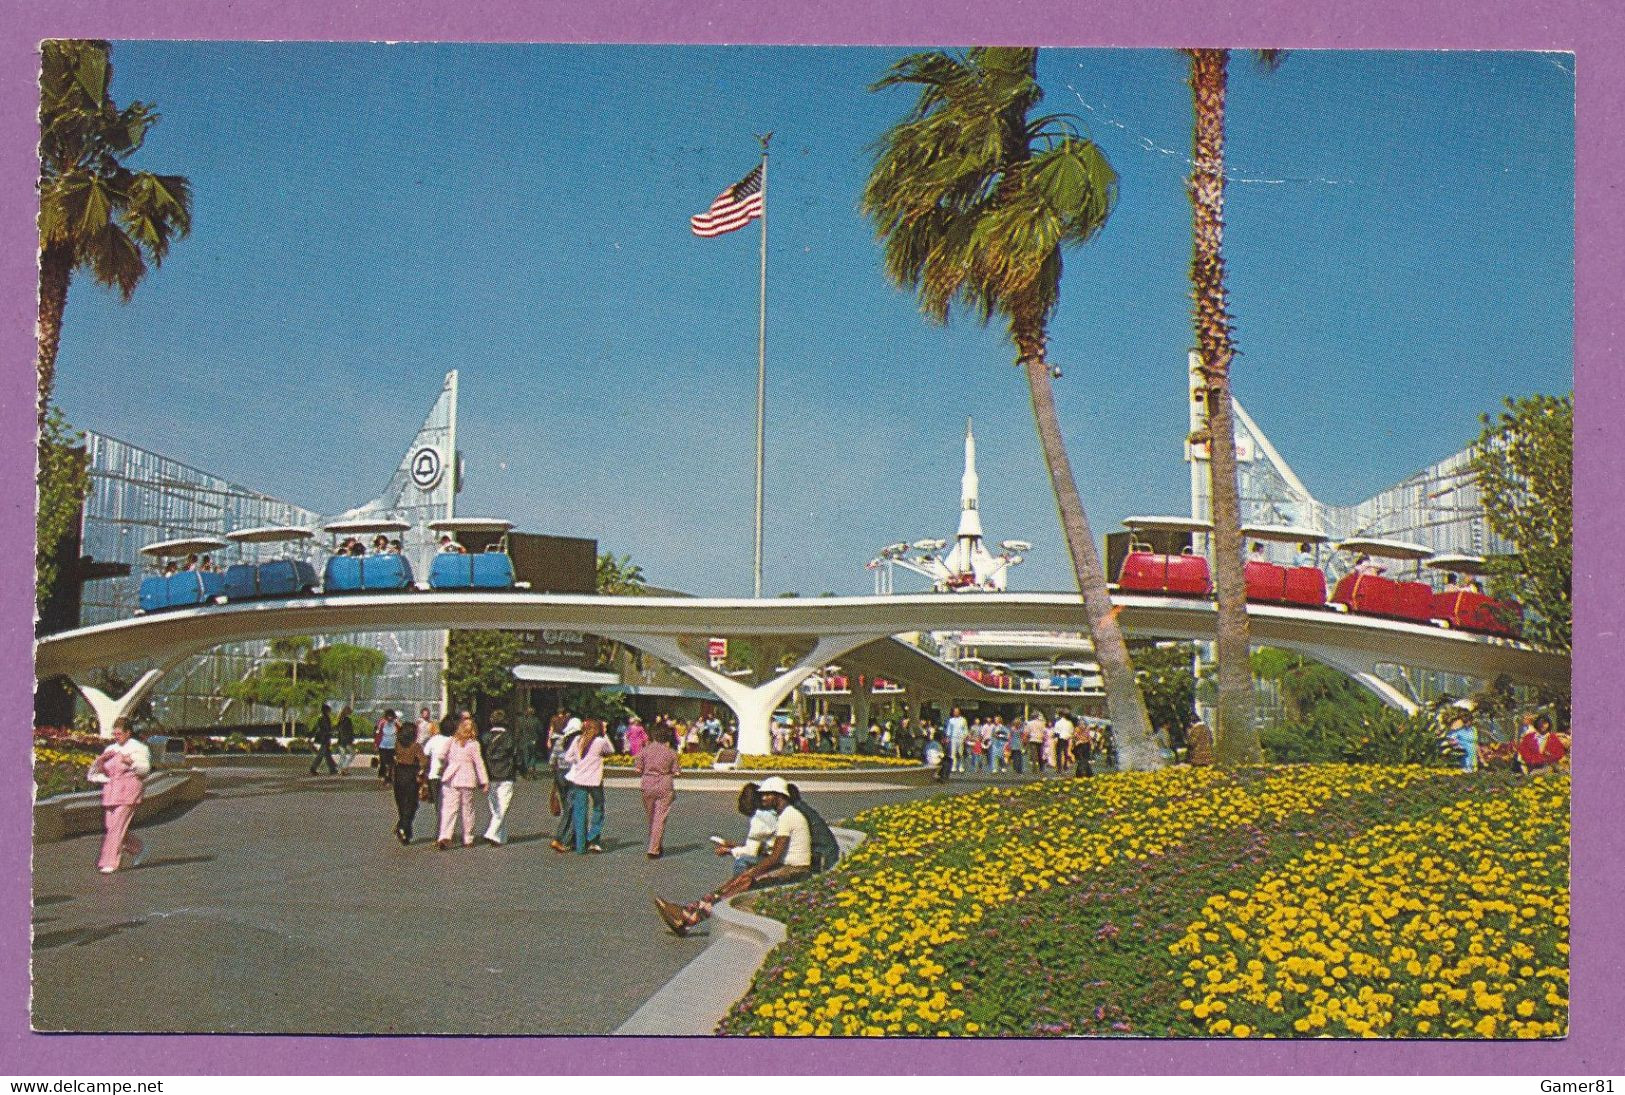 Disneyland - Tomorrowland Entrance - Anaheim